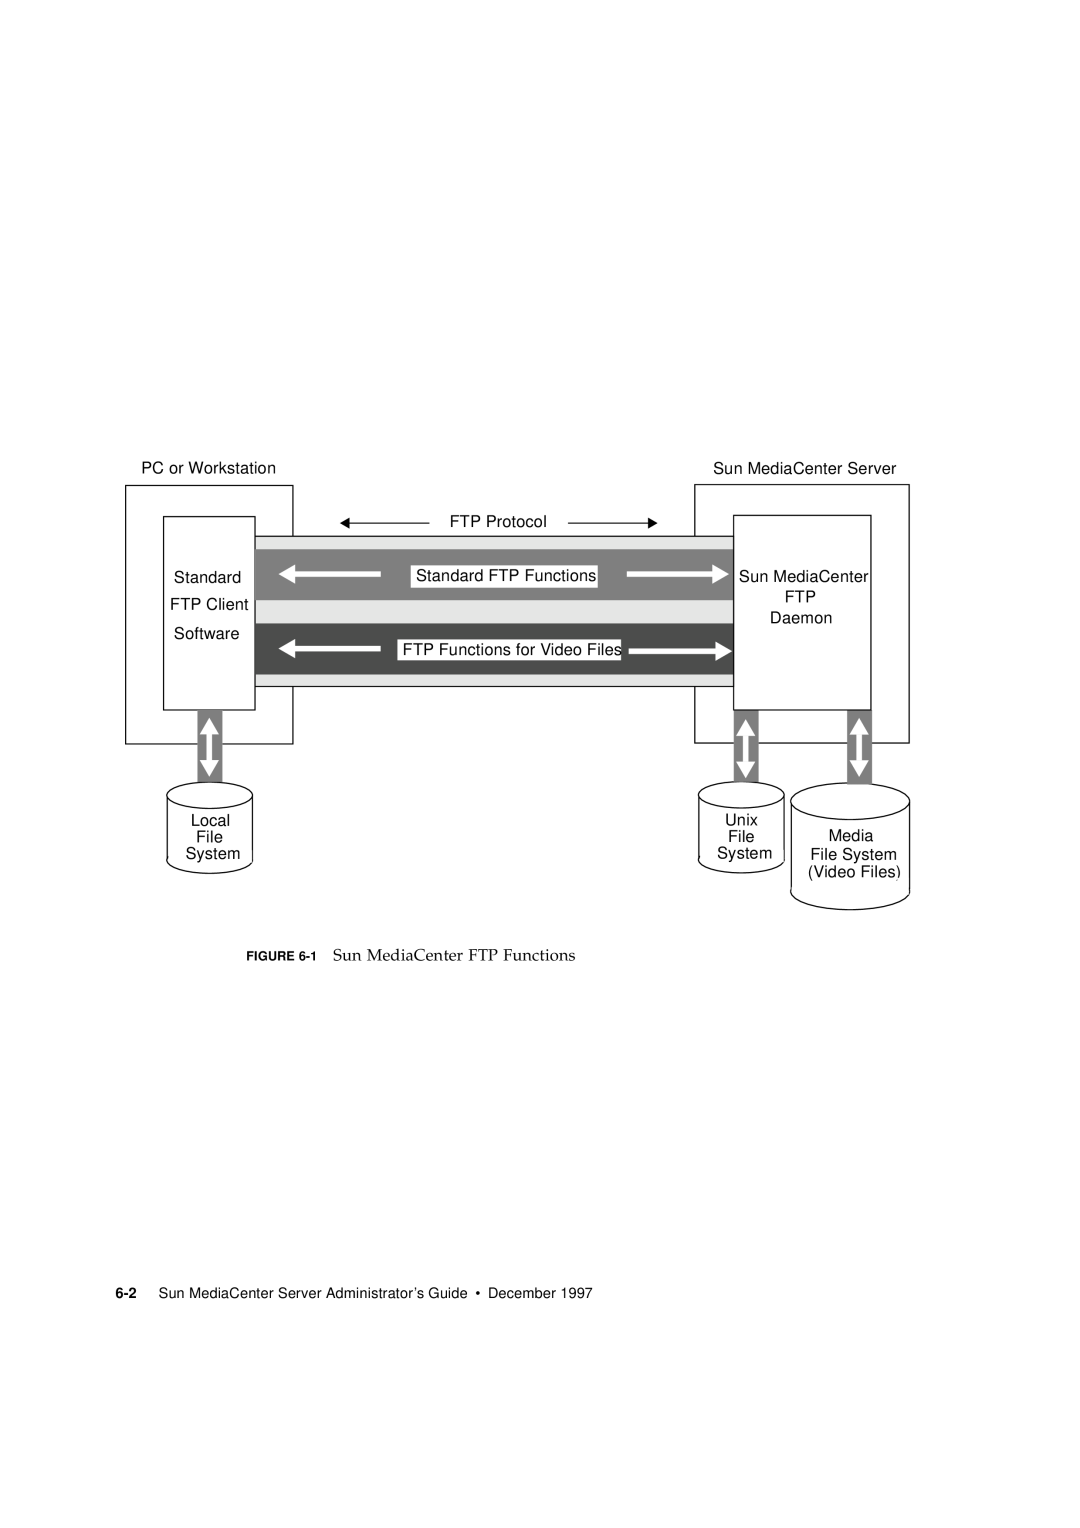 Sun Microsystems 2.1 manual 1 Sun MediaCenter FTP Functions, Standard, Daemon 